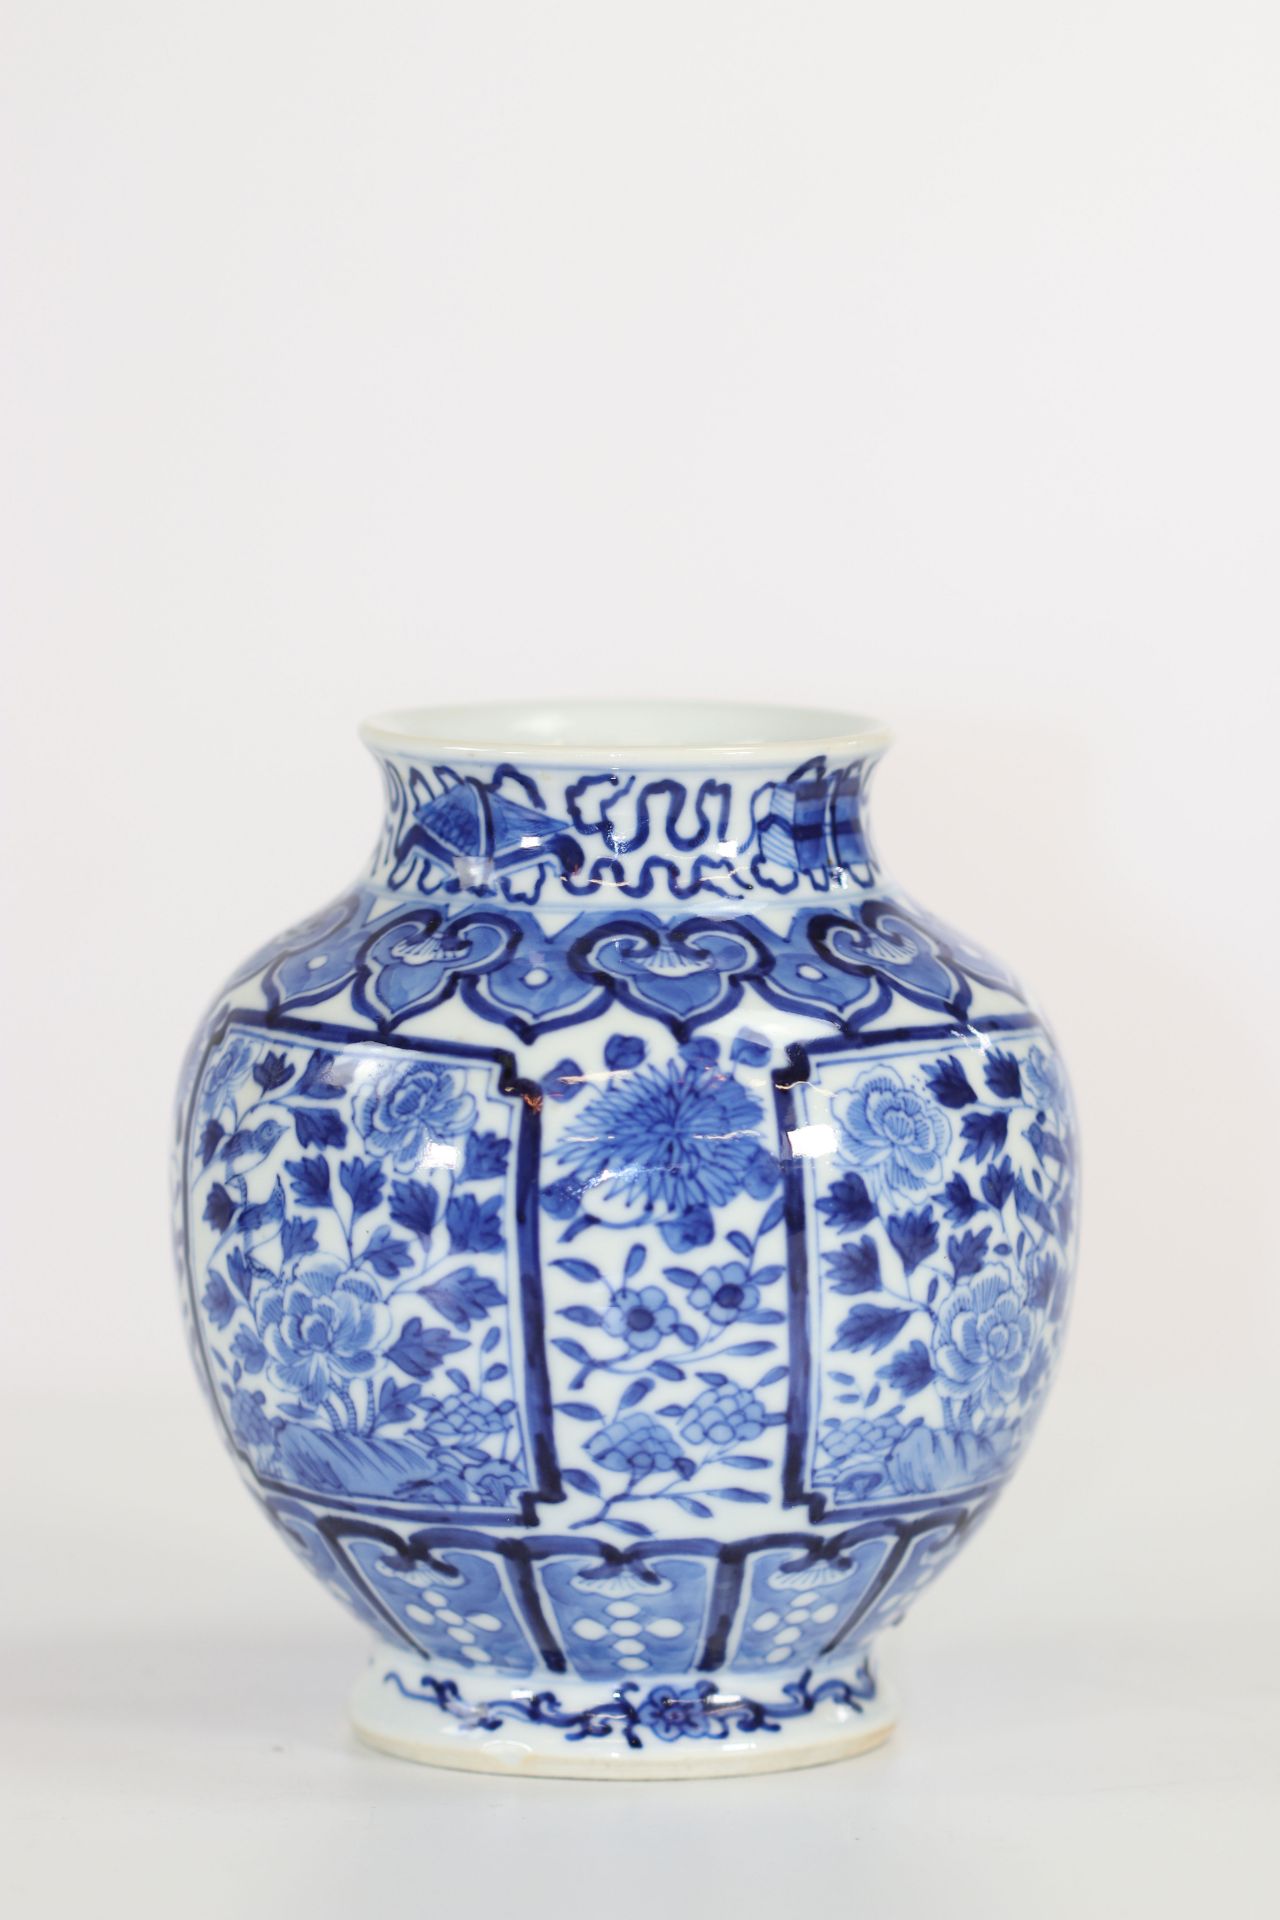 China blanc-bleu porcelain vase vegetable decor Qing dynasty 4 character mark - Image 2 of 4